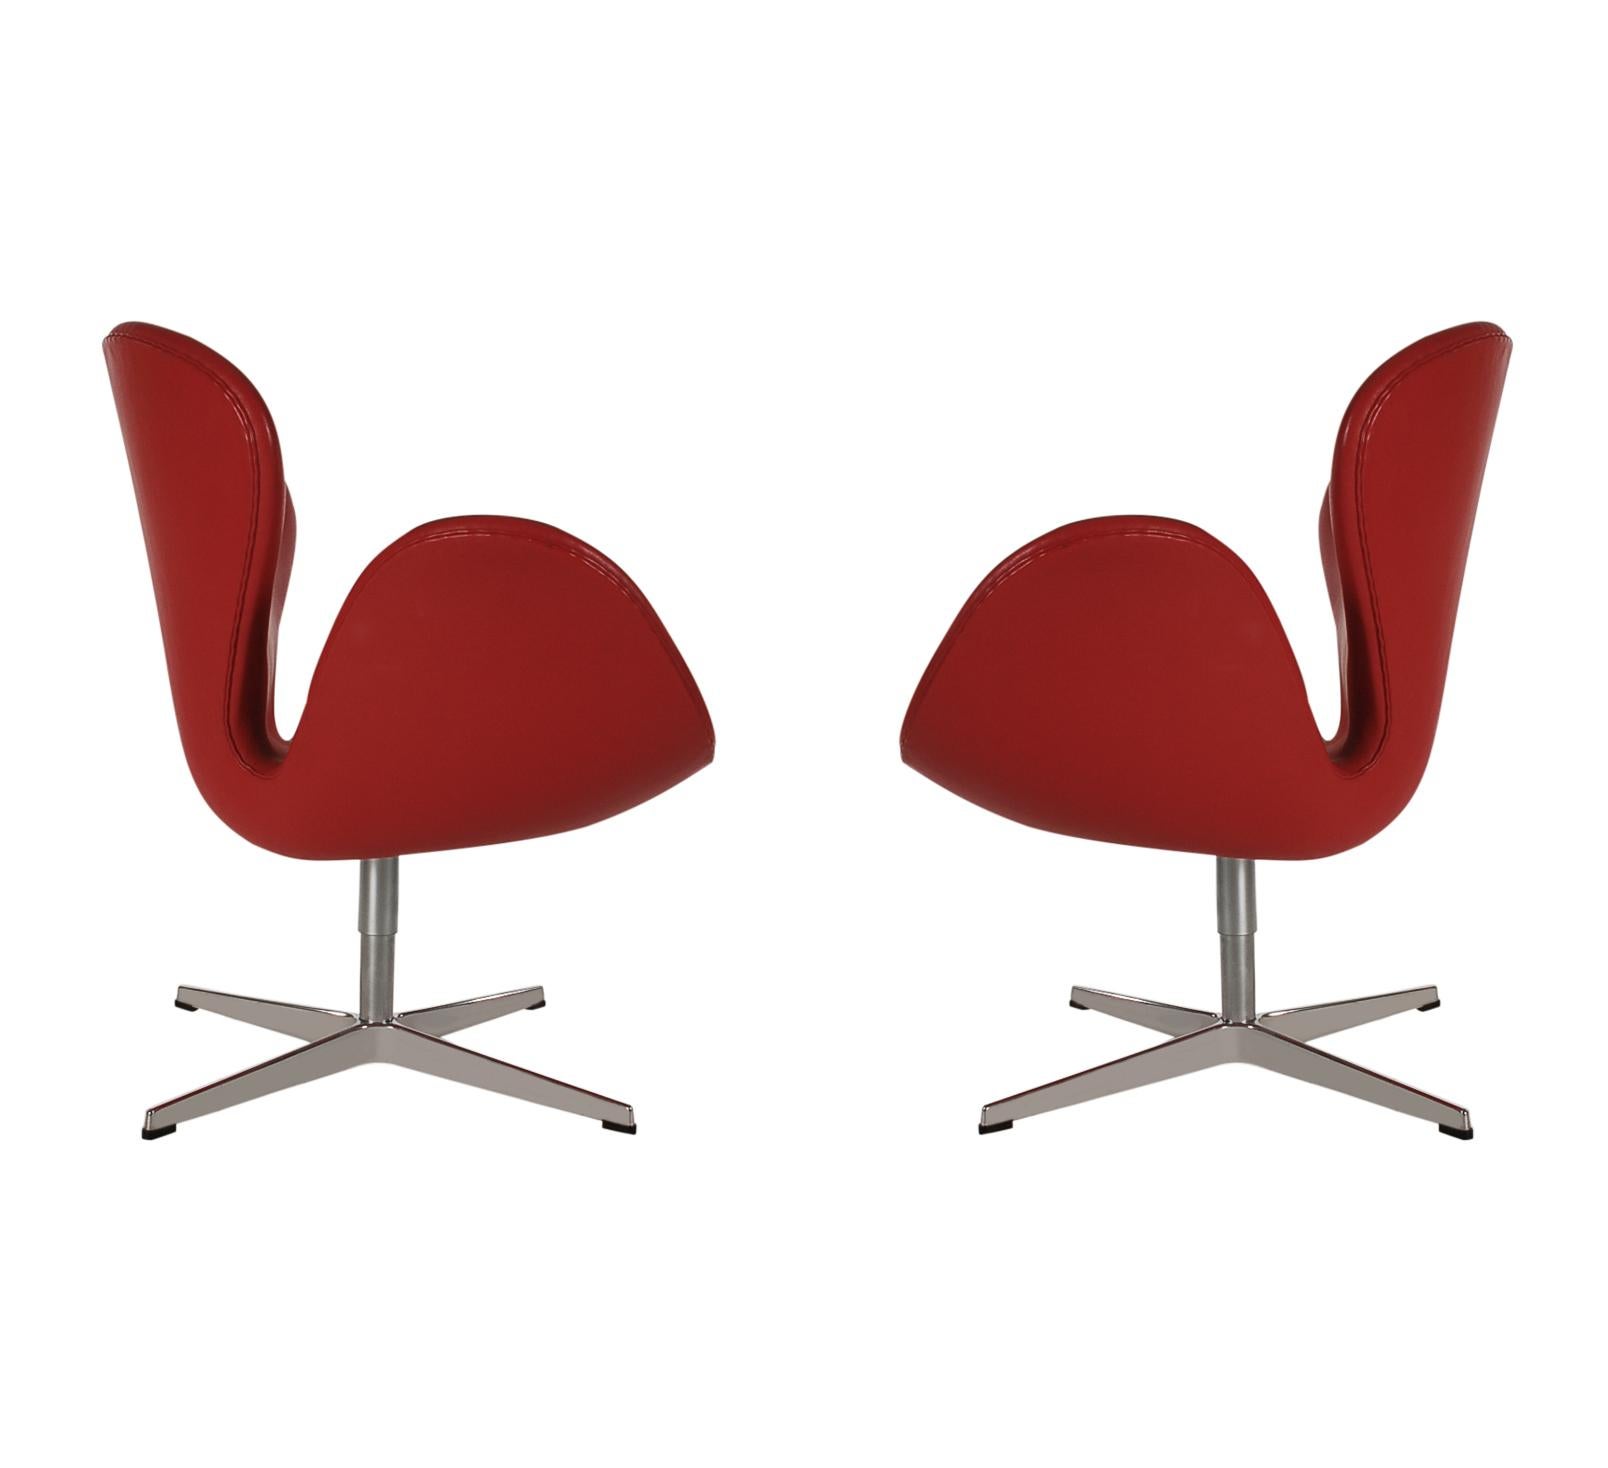 Aluminum Midcentury Danish Modern Pair of Red Leather Swivel Swan Chairs / Arne Jacobsen